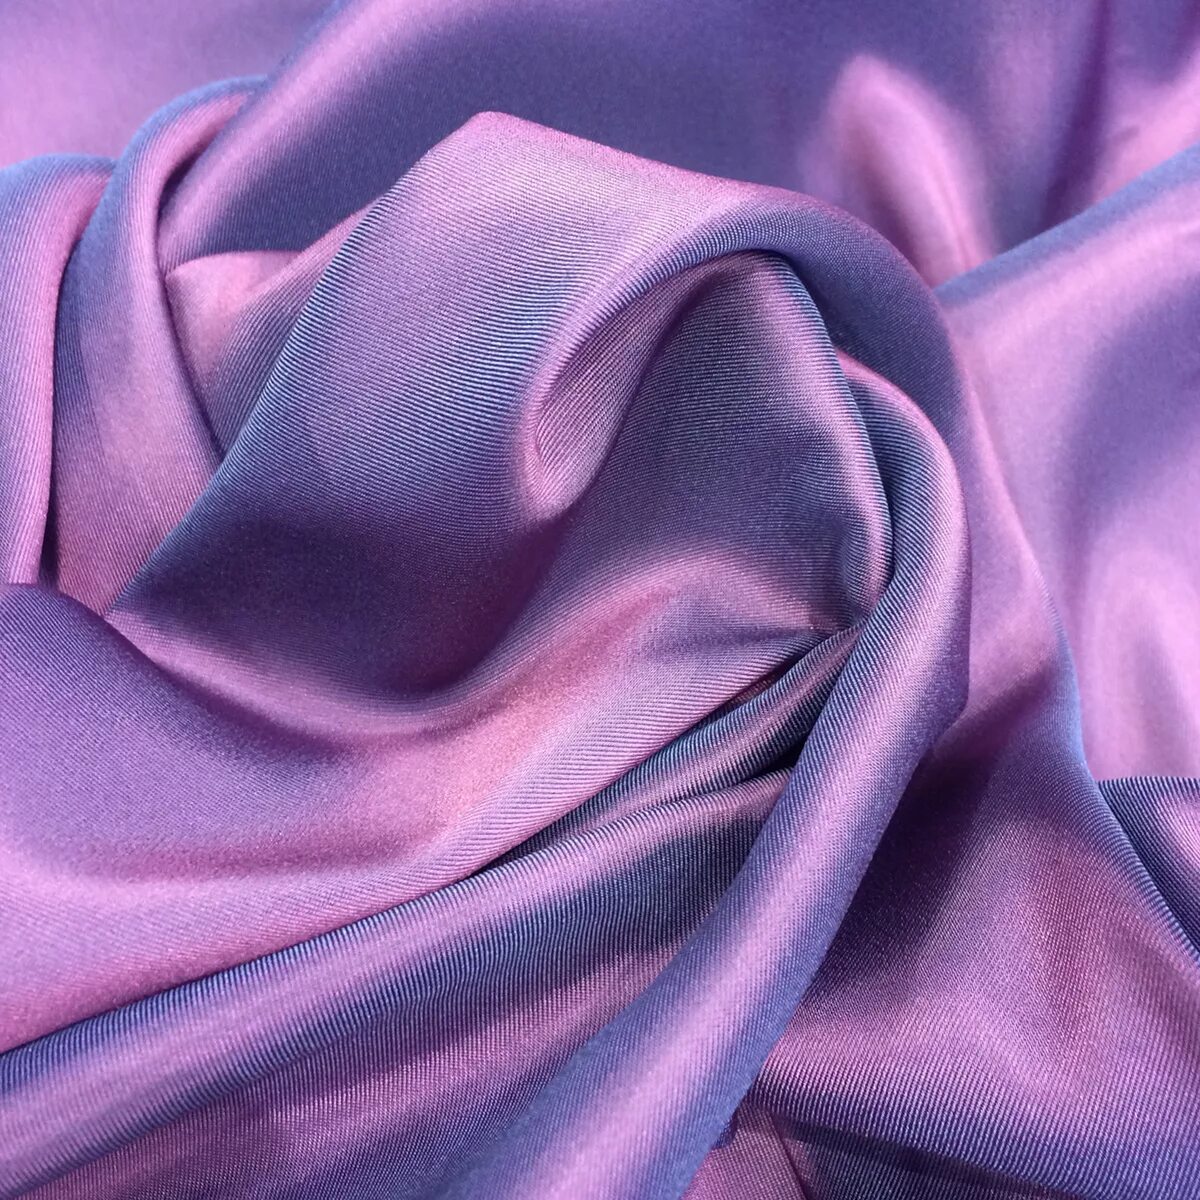 Ткани сирени. Ткань хамелеон стрейч. Фиолетовая ткань. Ткань органза хамелеон. Органза лавандового цвета.